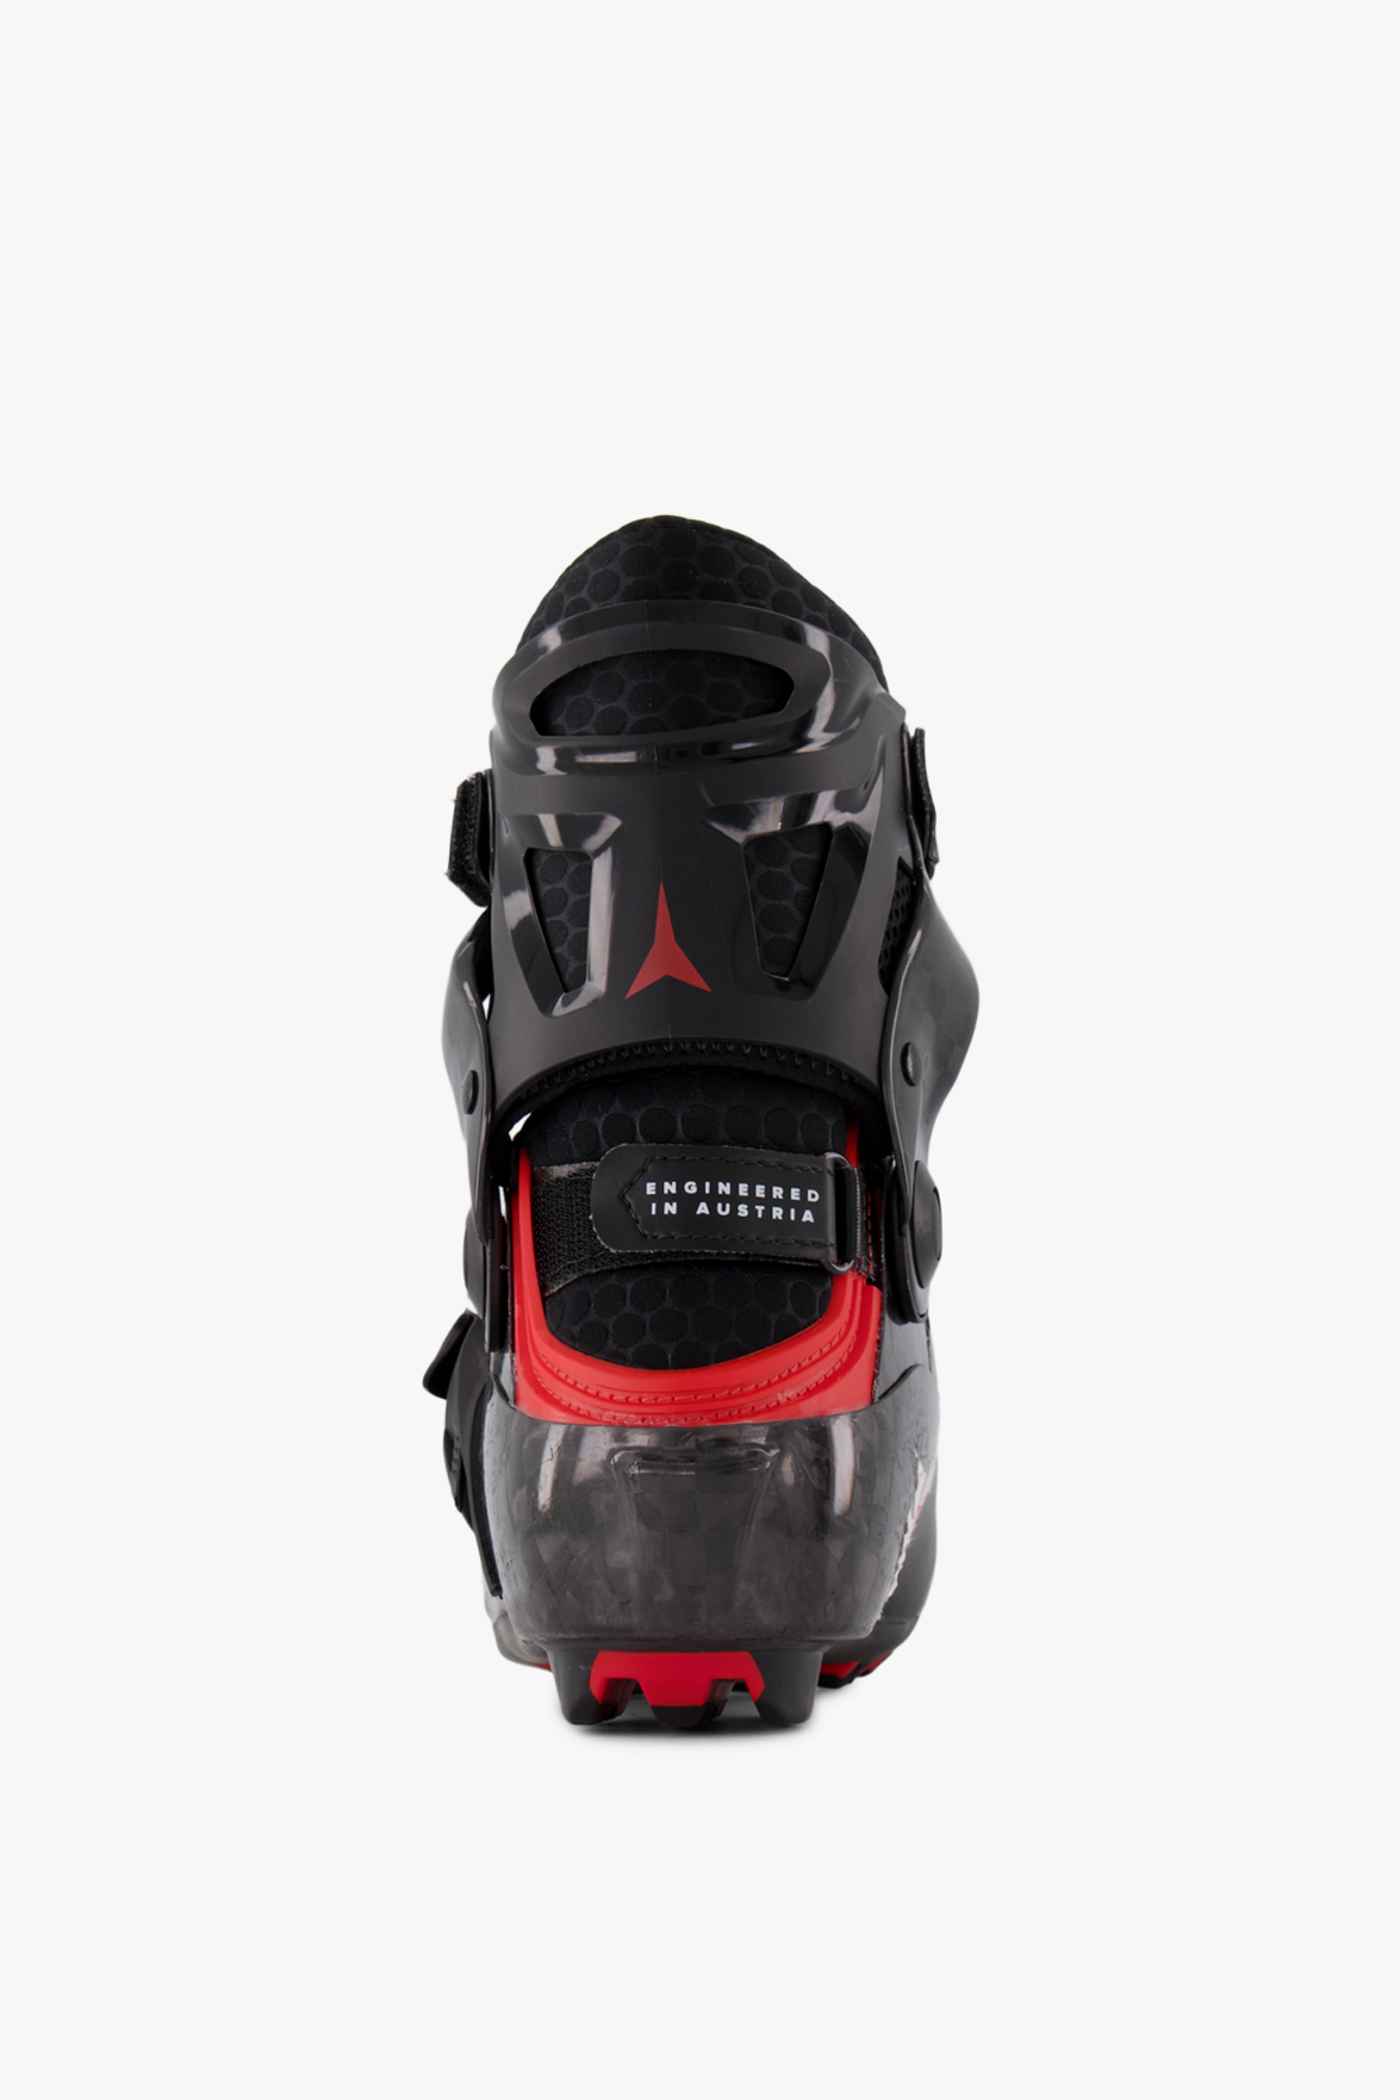 Atomic Redster S9 Langlaufschuhe Unisex Langlauf-Schuhe Skate Carbon Rot/Schwarz 